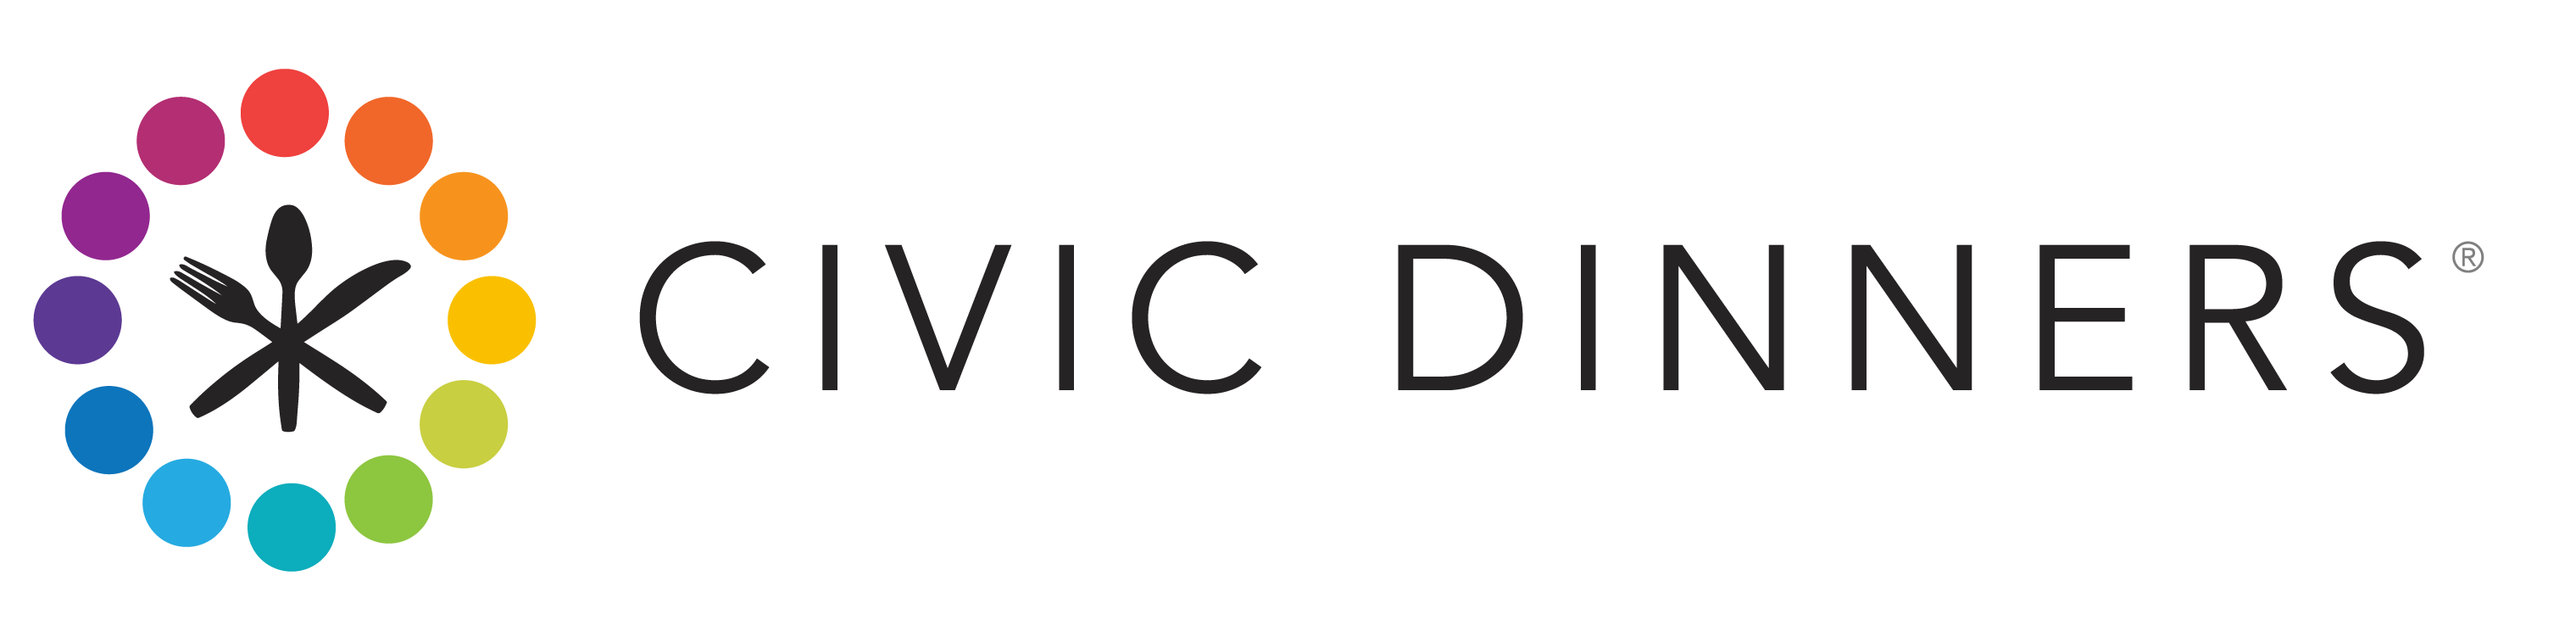 Civic-Dinners_logo-horizontal-color-R-1